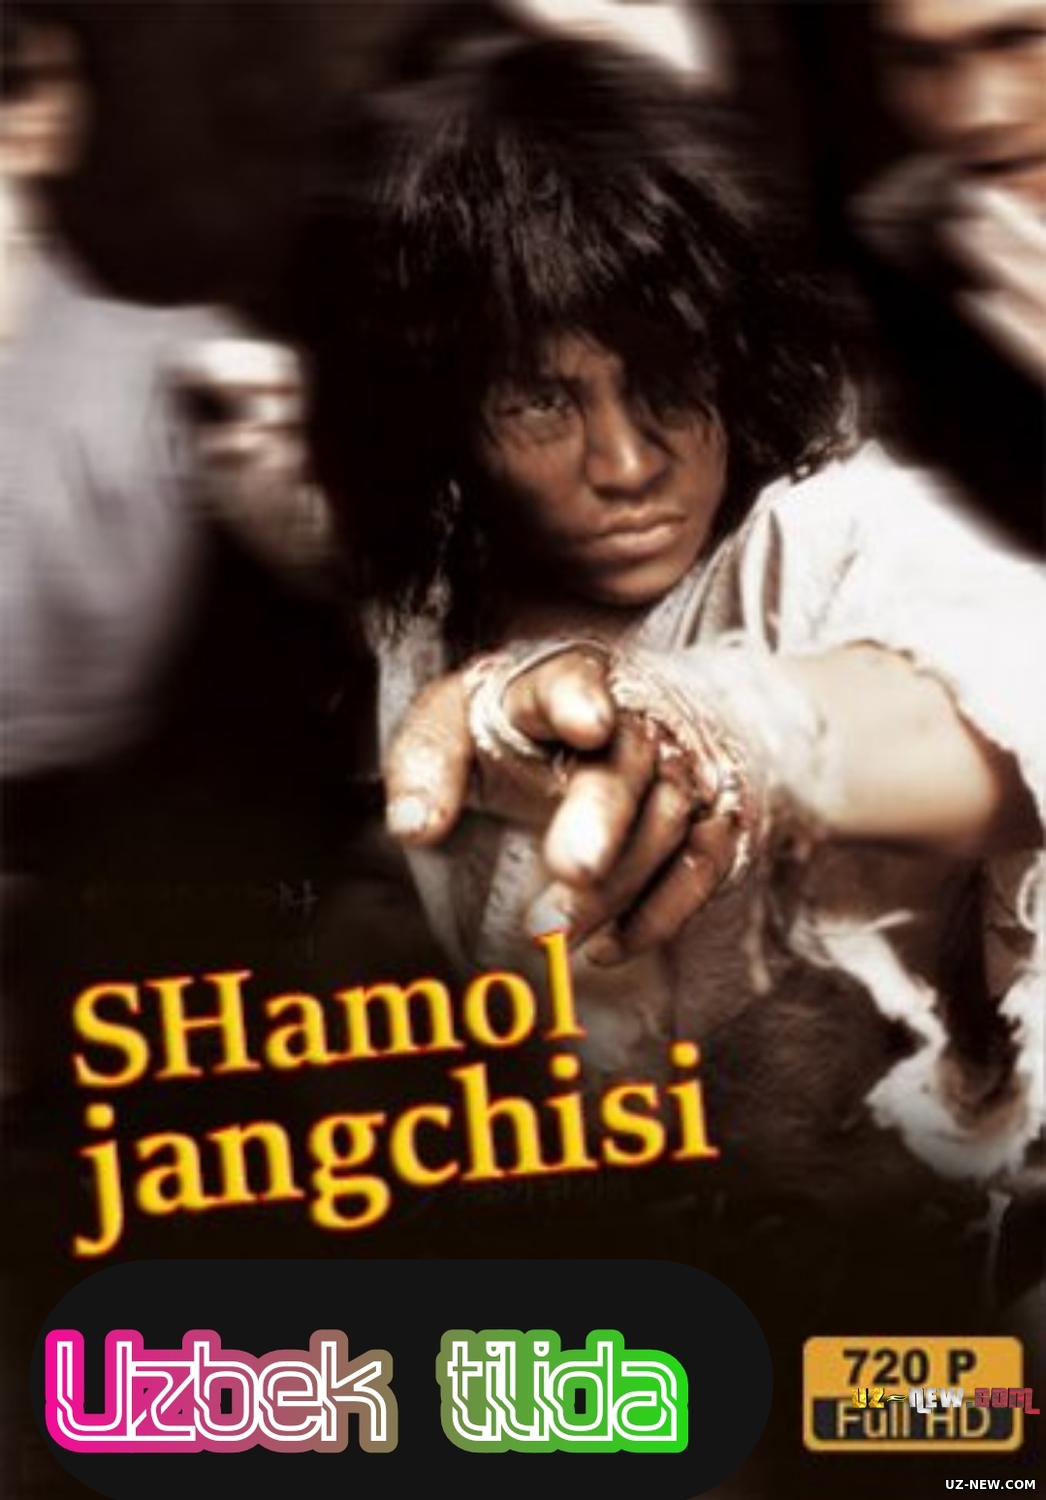 Shamol jangchisi / Shamol urushi (Uzbek tilida)